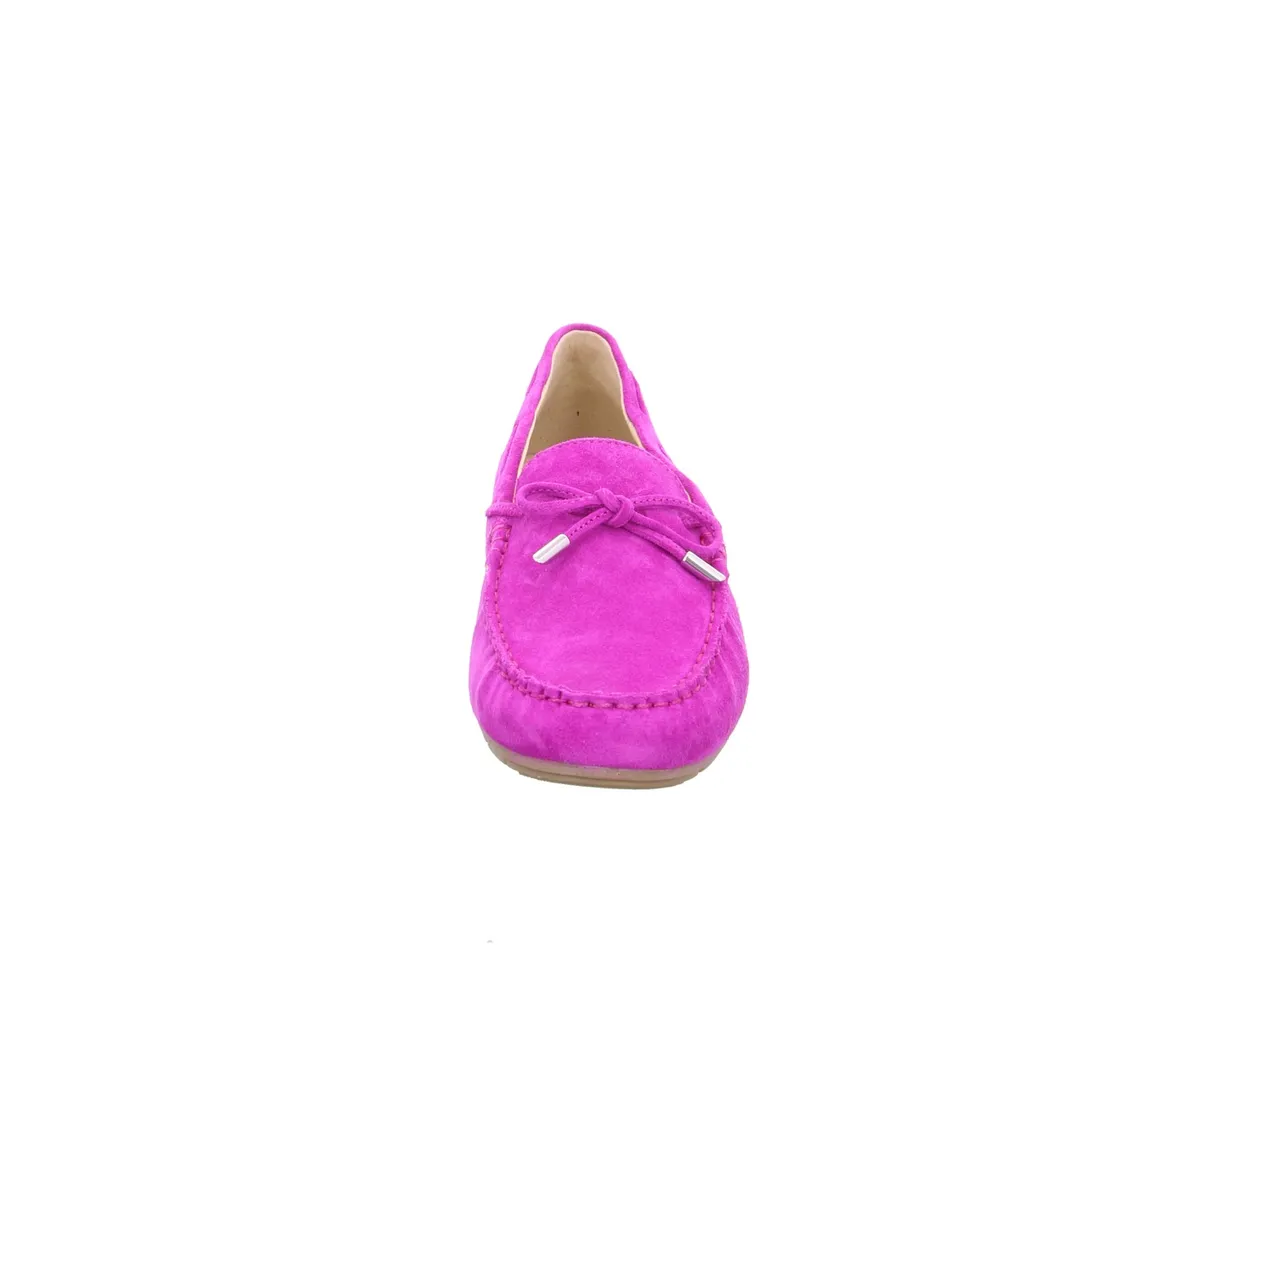 Klassische Slipper lila/pink Alabama 37,5